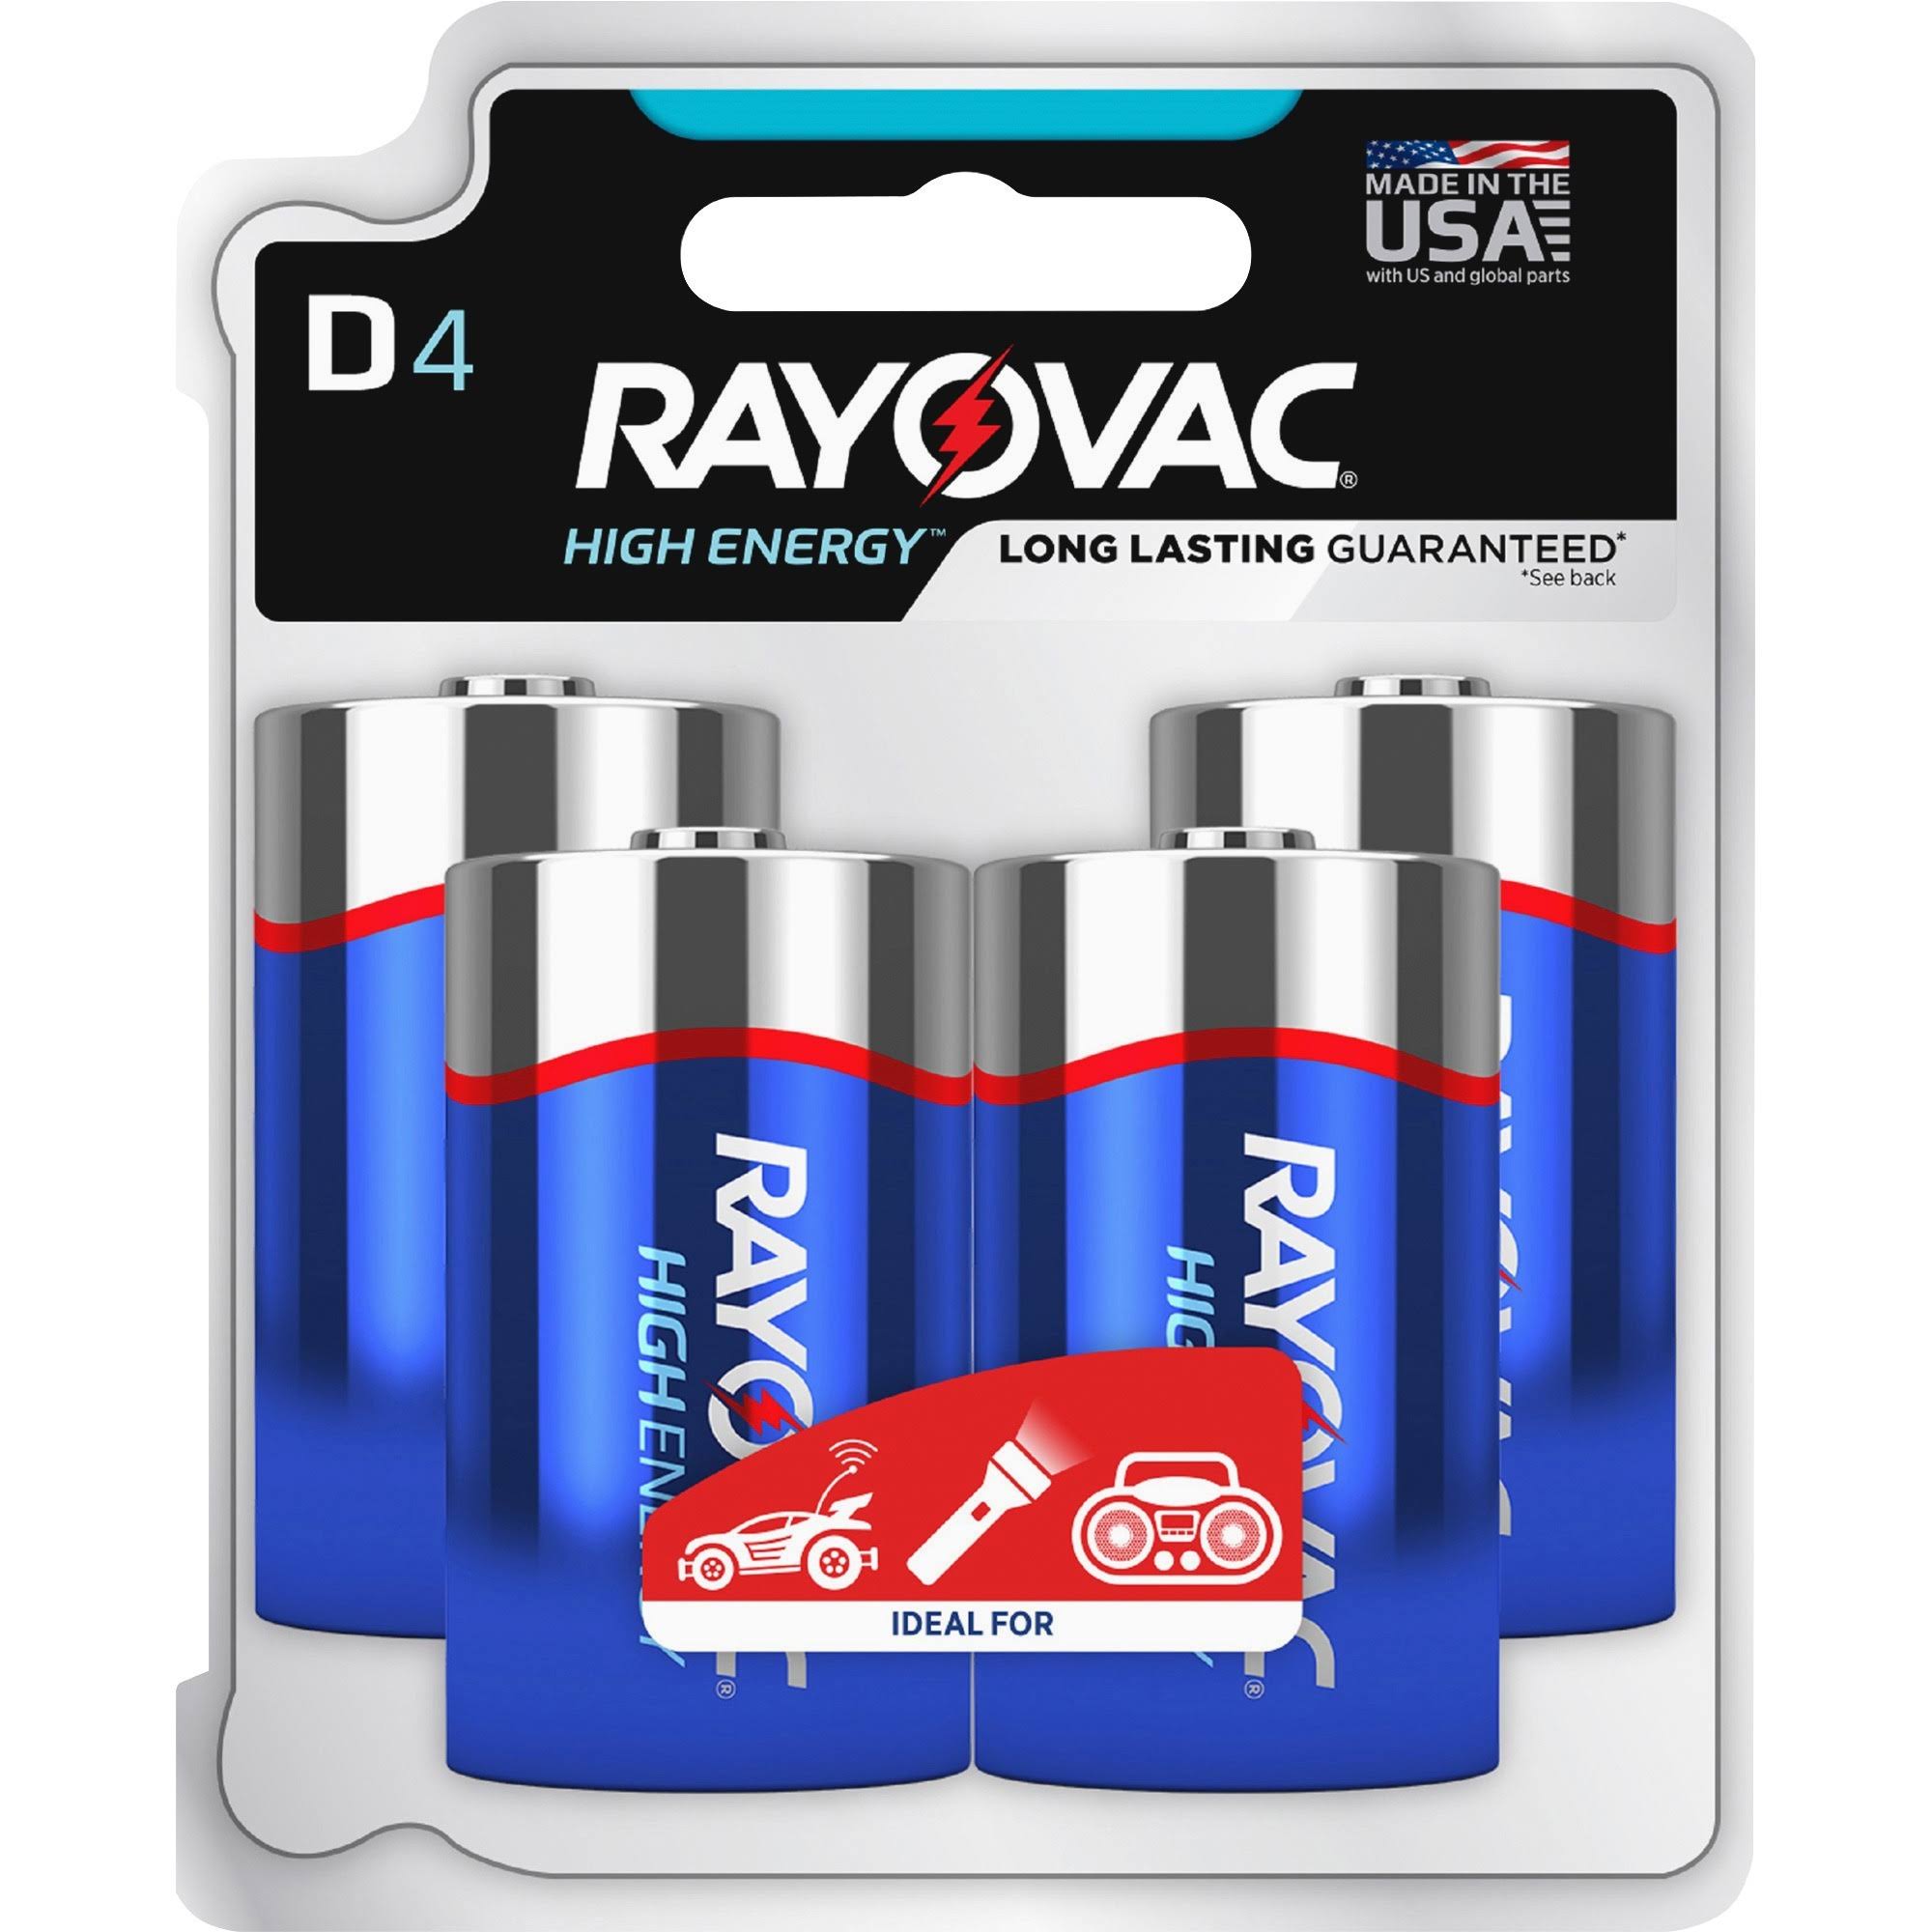 Rayovac High Energy Alkaline D Batteries - 1.5V, 4pcs